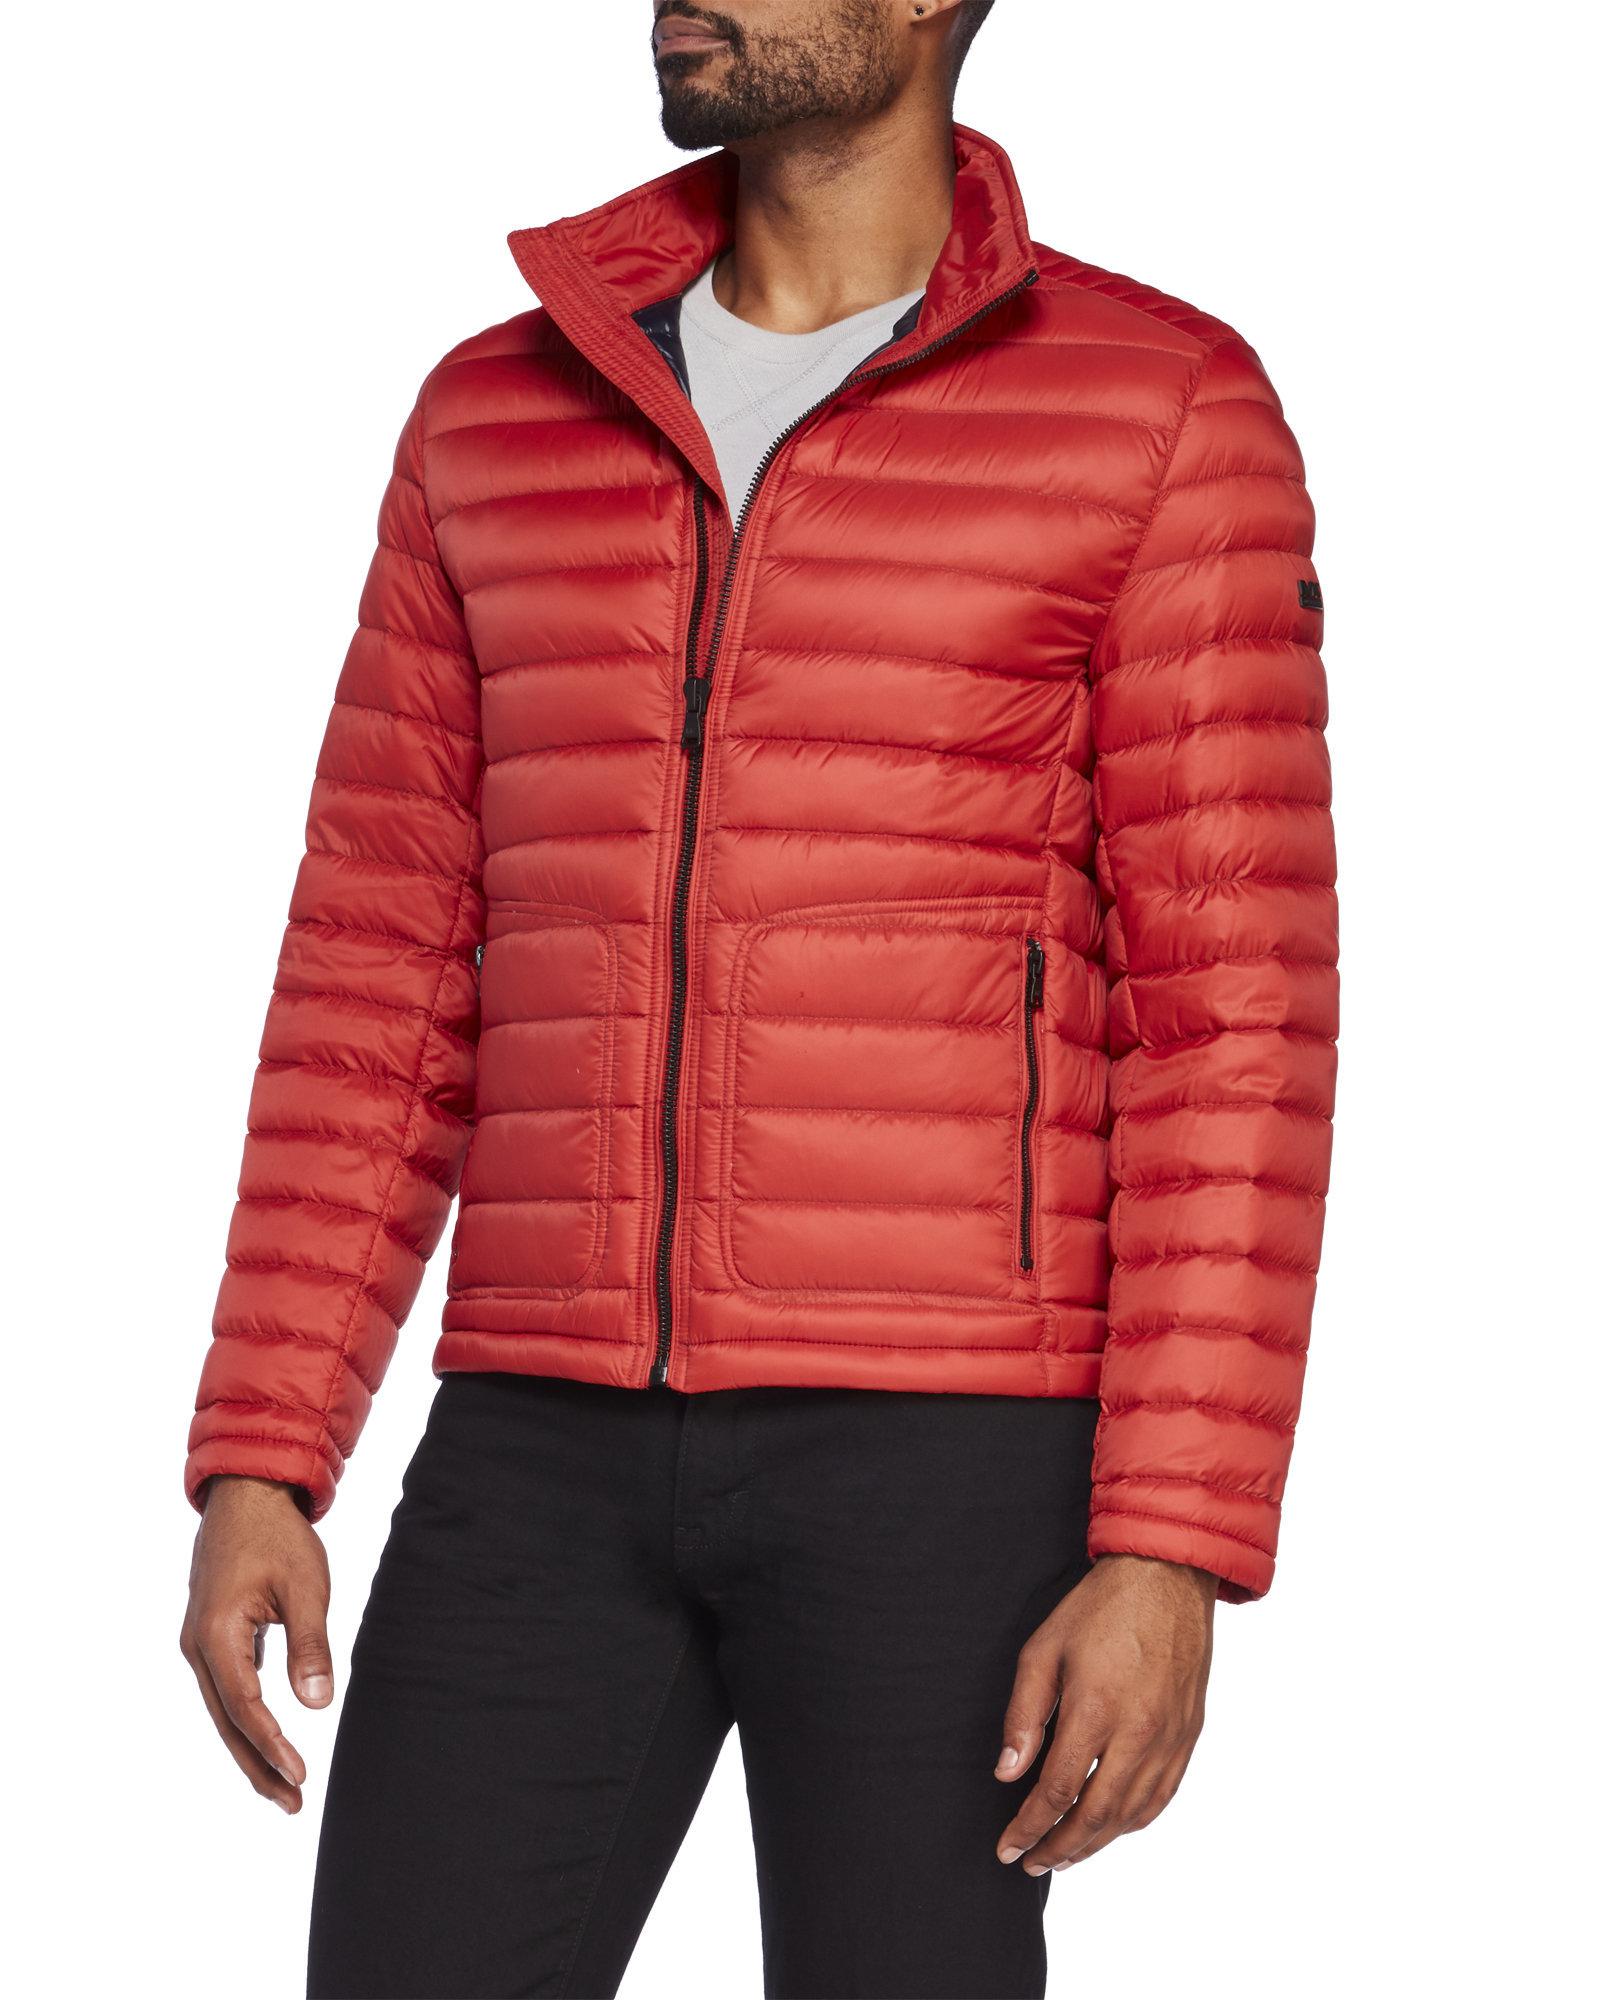 Michael Kors Moto Packable Down Jacket in Red for Men - Lyst